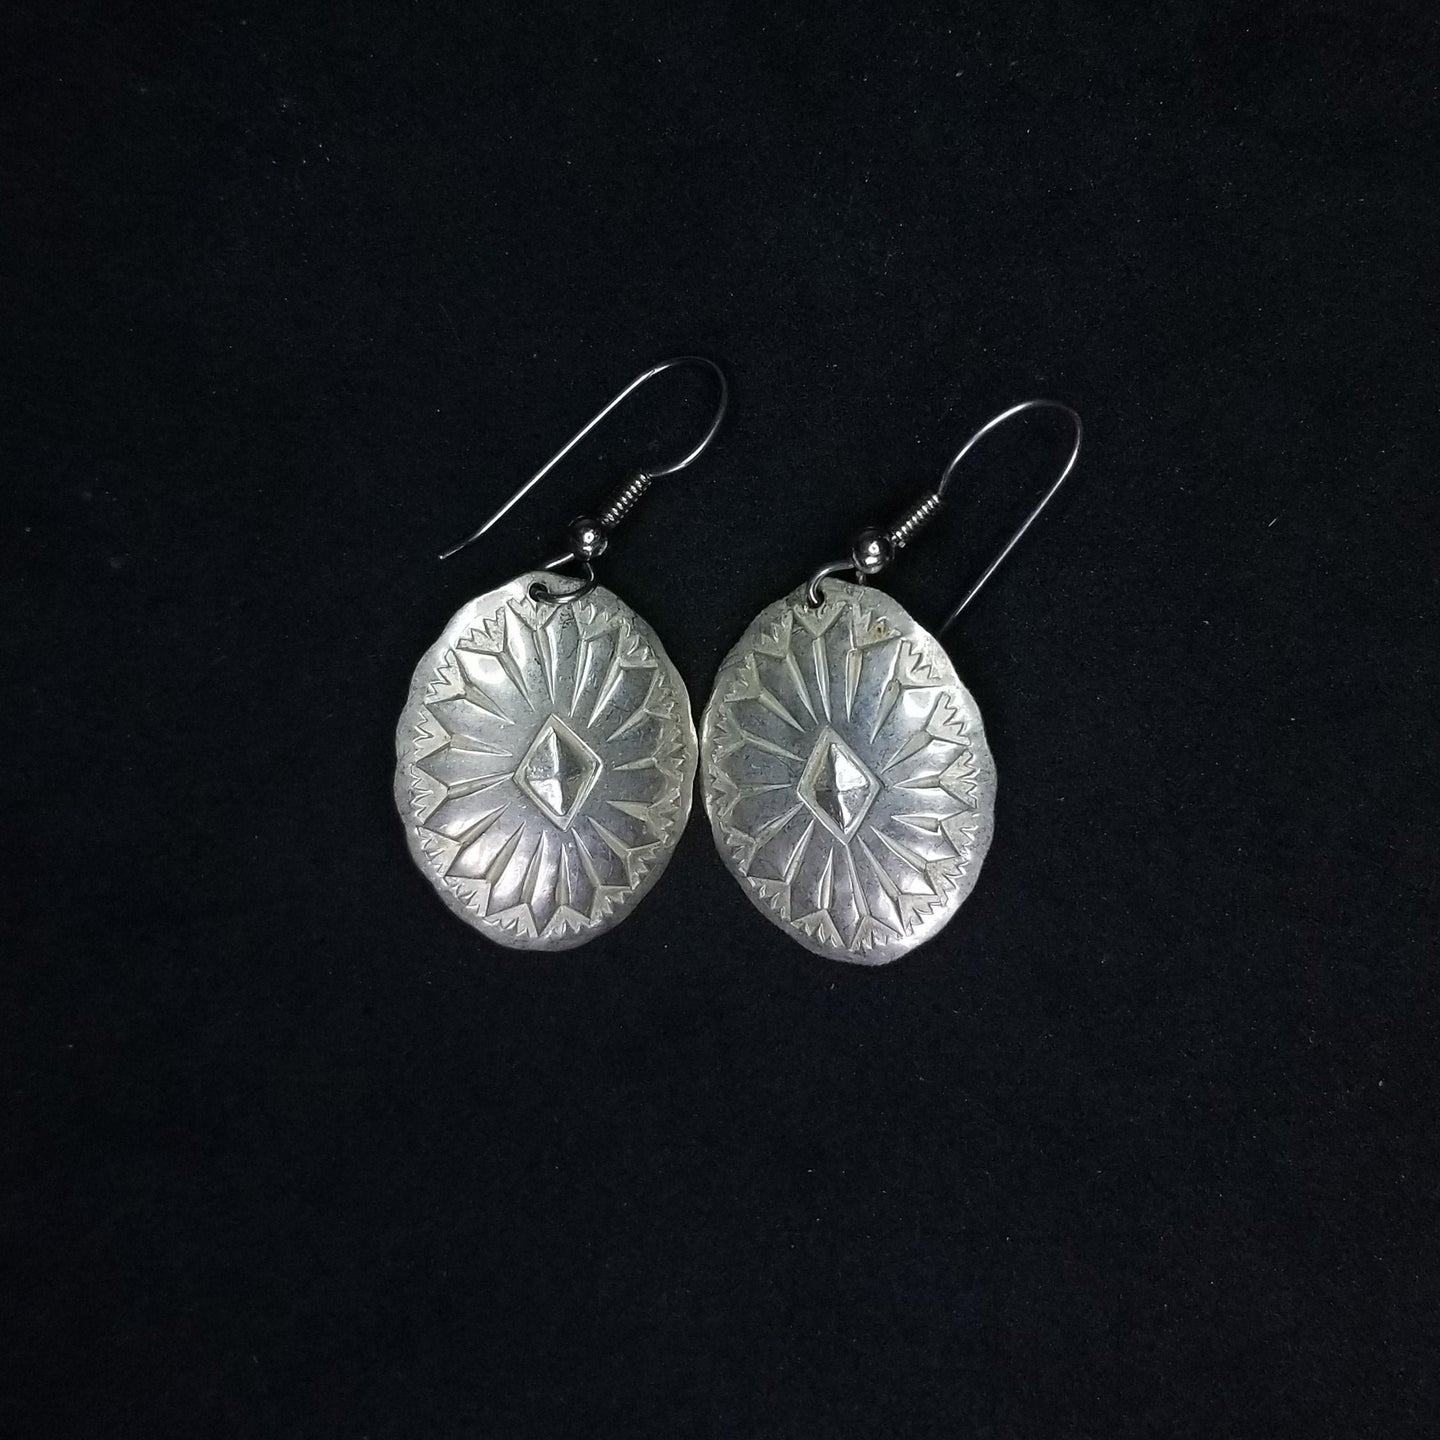 Oval Flower with Symbol sterling silver jewelry dangle earrings